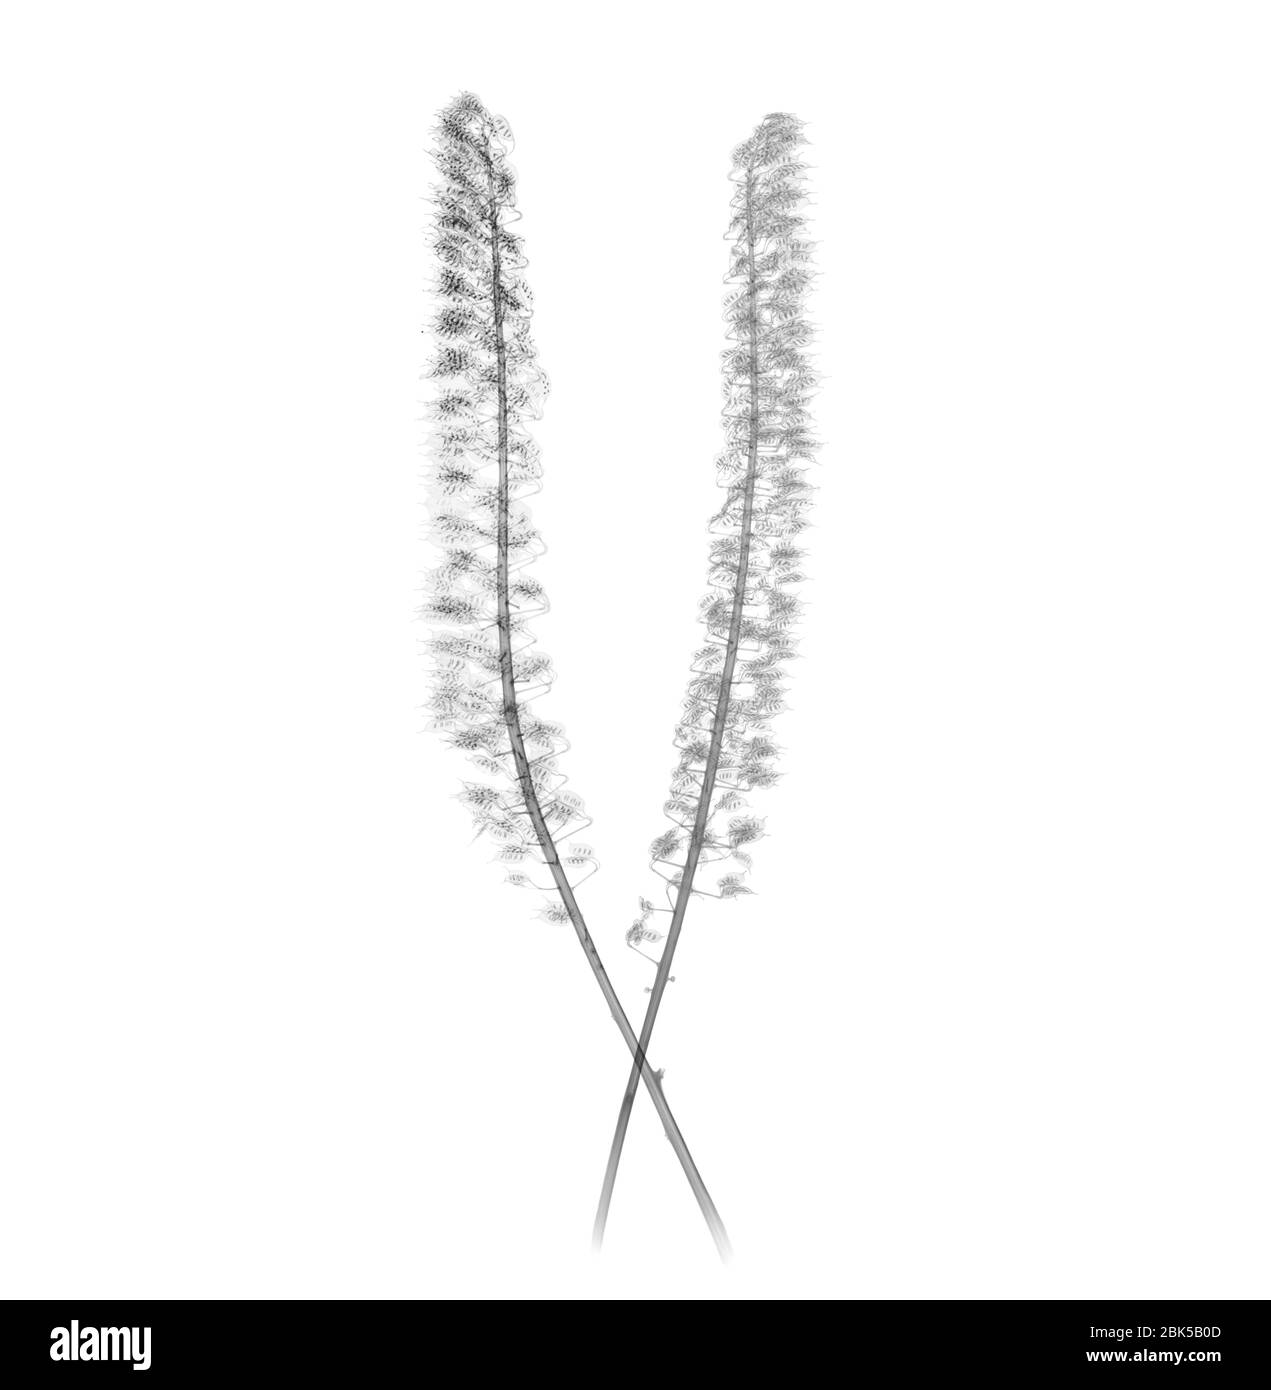 Two bugbane (Actaea simplex) plants, X-ray. Stock Photo